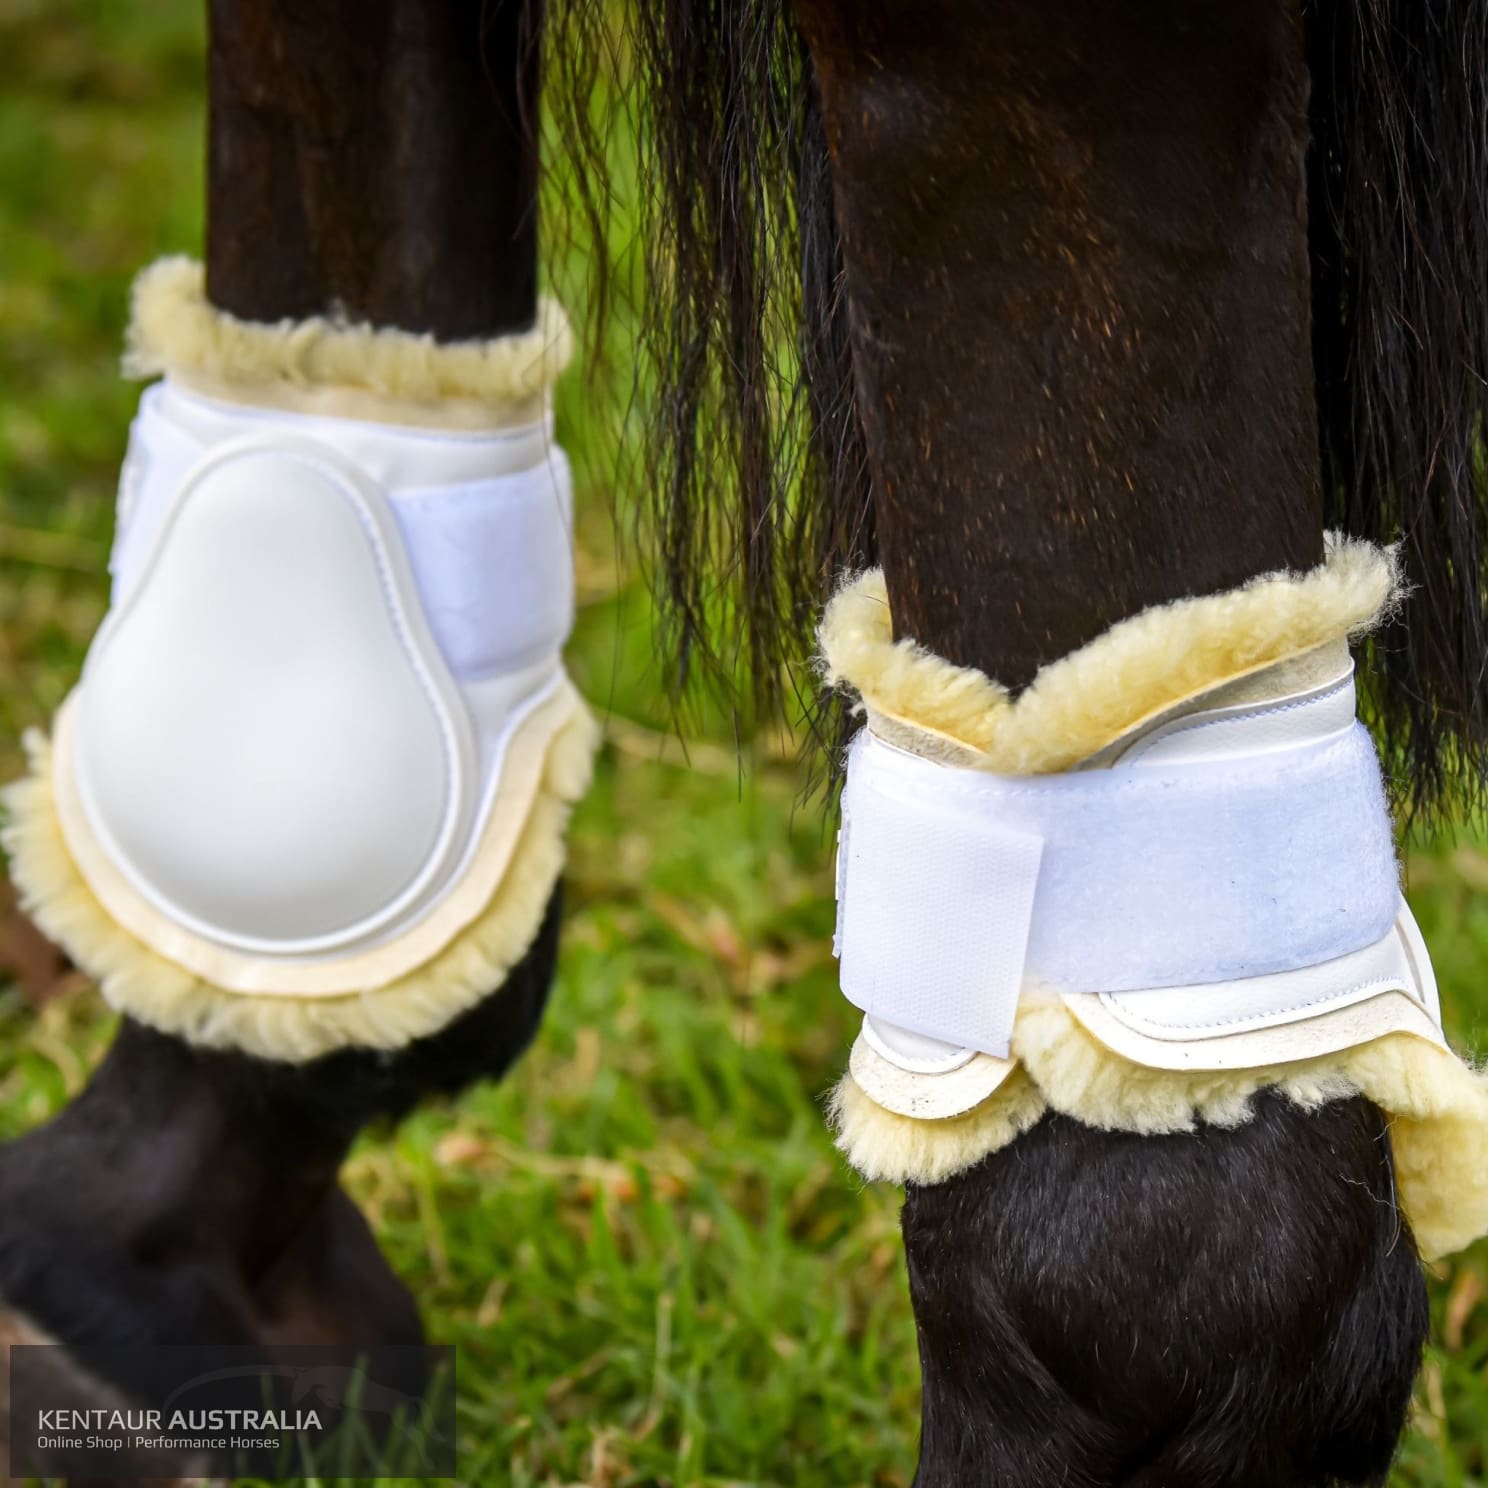 Kentaur ‘Profi’ Hind Jumping Boots with Sheepskin Jumping Boots